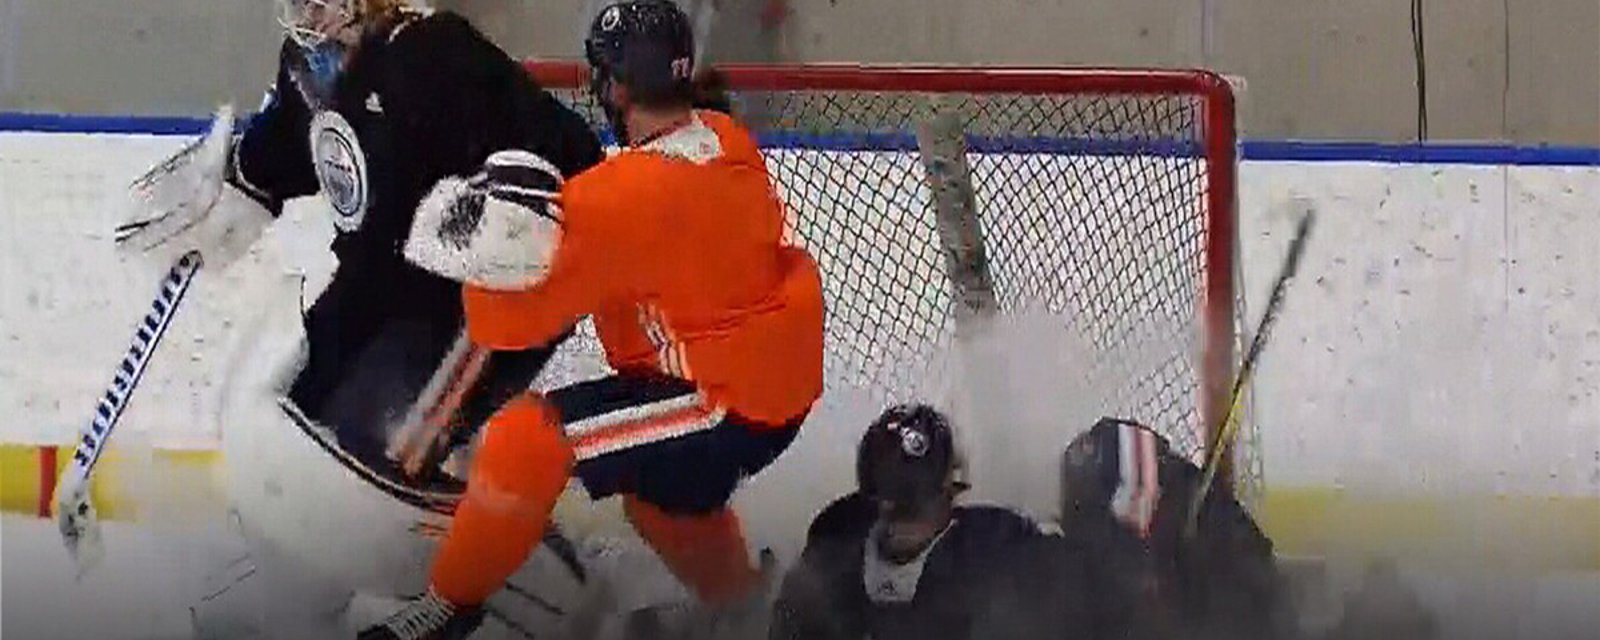 Must See: Scary moment as Klefbom sends McDavid flying in Oilers practice